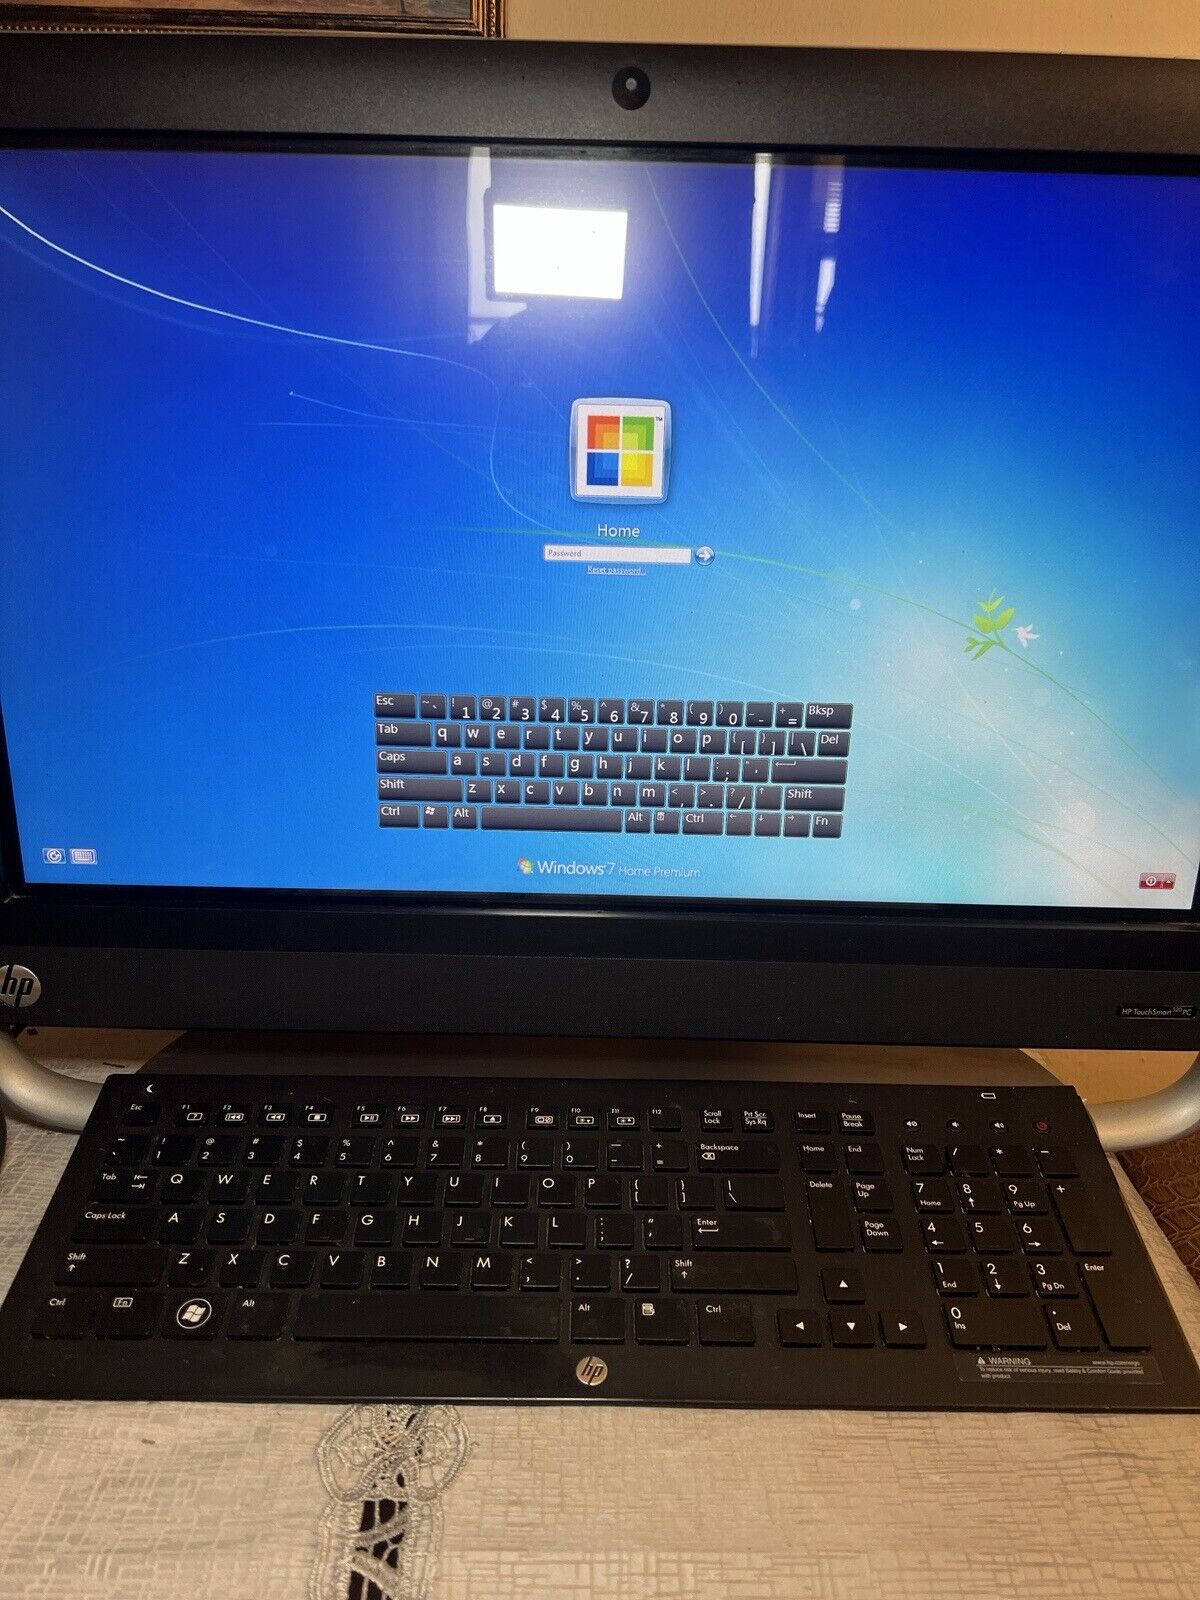 HP TouchSmart 520 Windows 7 All-in-One Desktop Computer